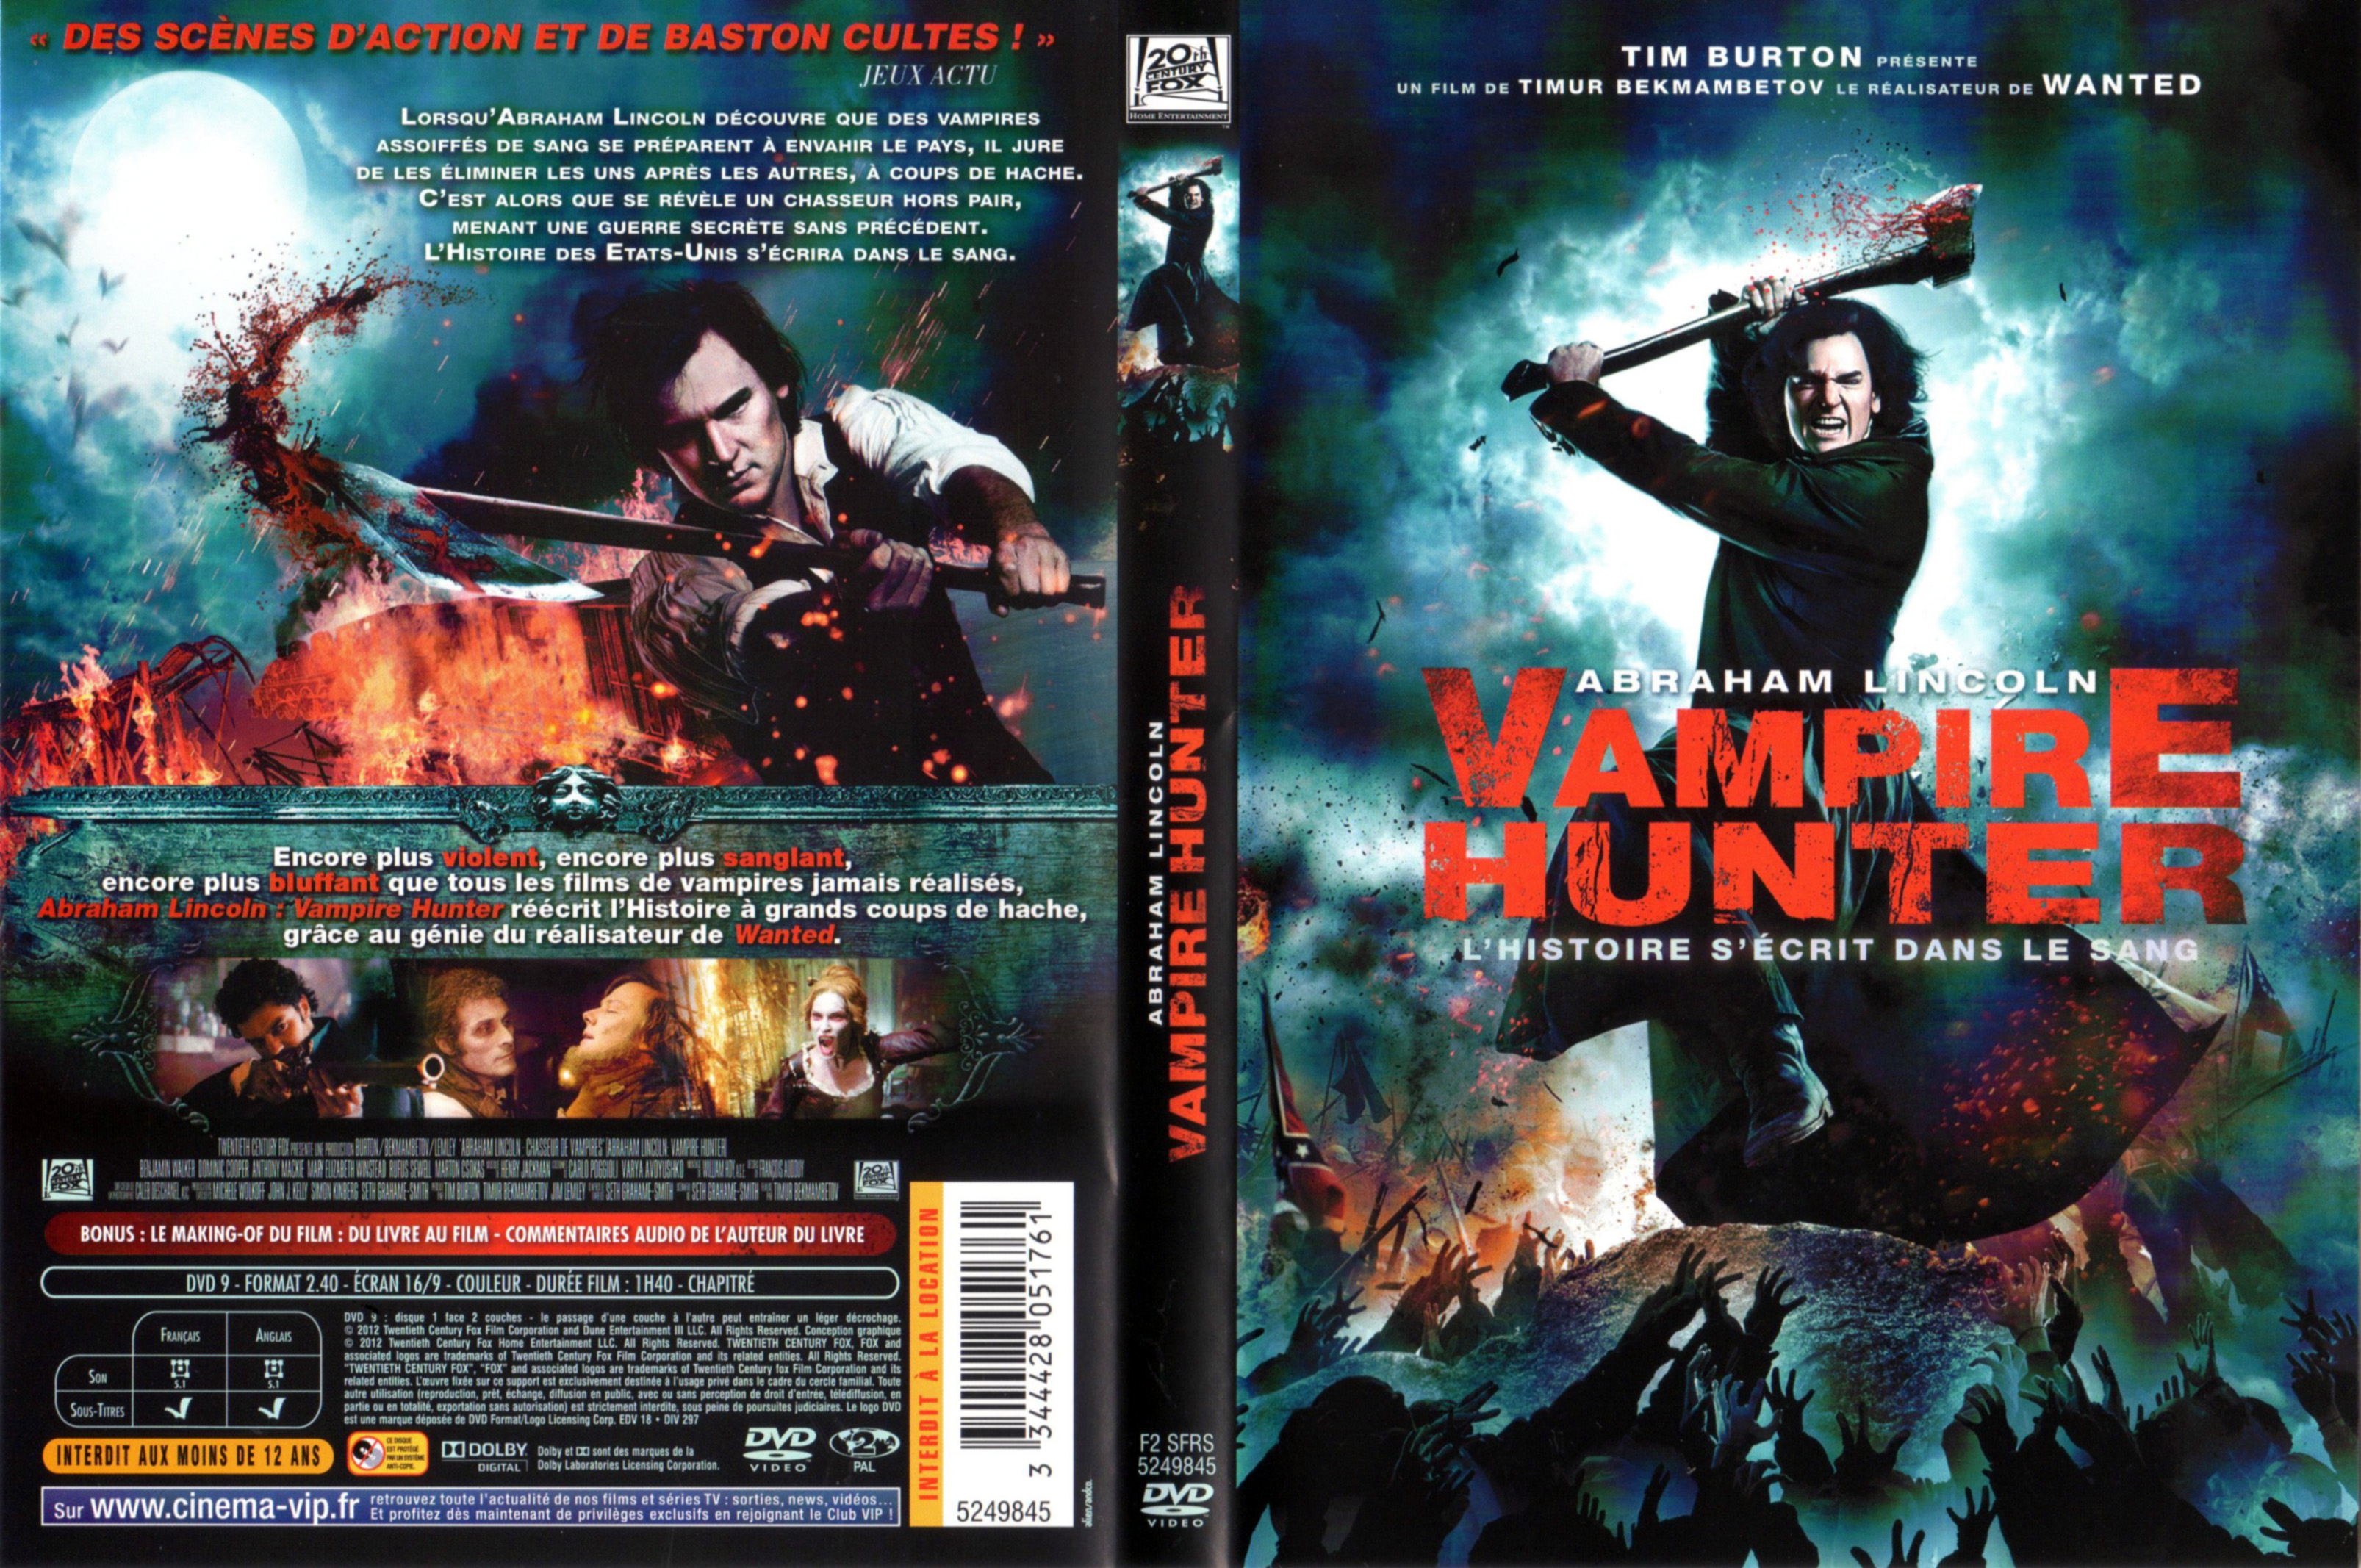 Jaquette DVD Abraham Lincoln Vampire hunter